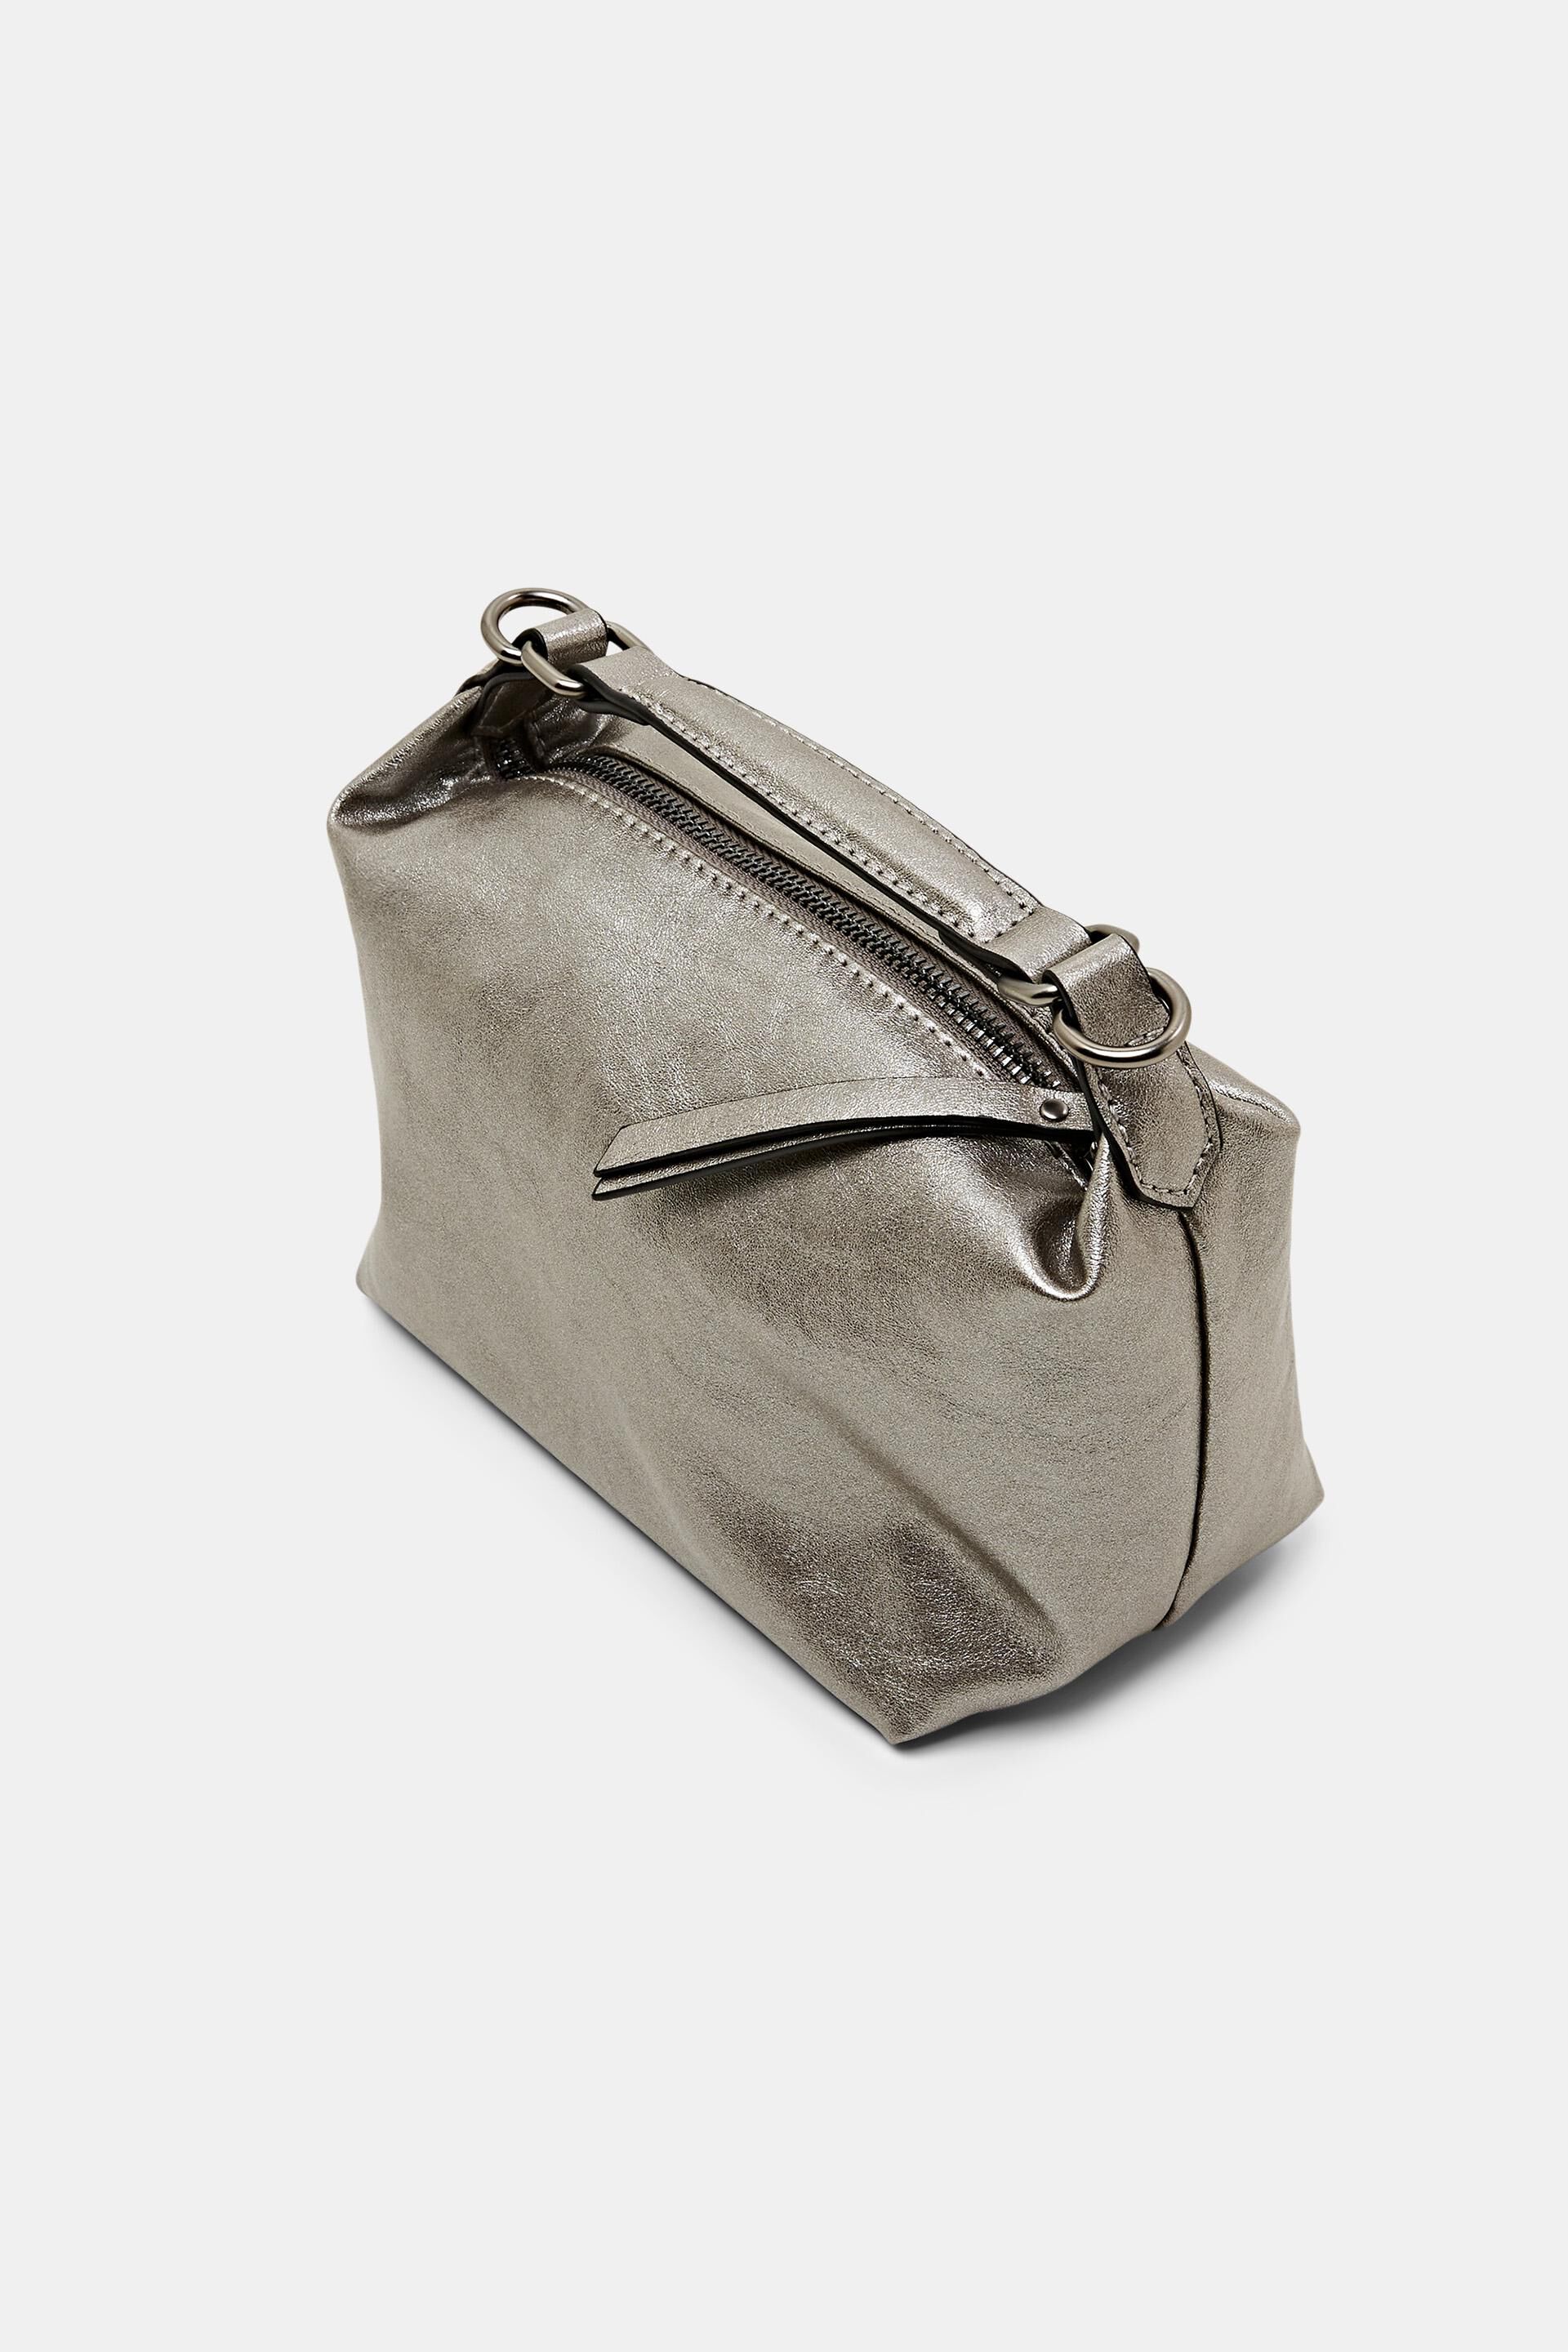 Idol Convertible Beaded Silver Leather Crossbody/Shoulder Handbag